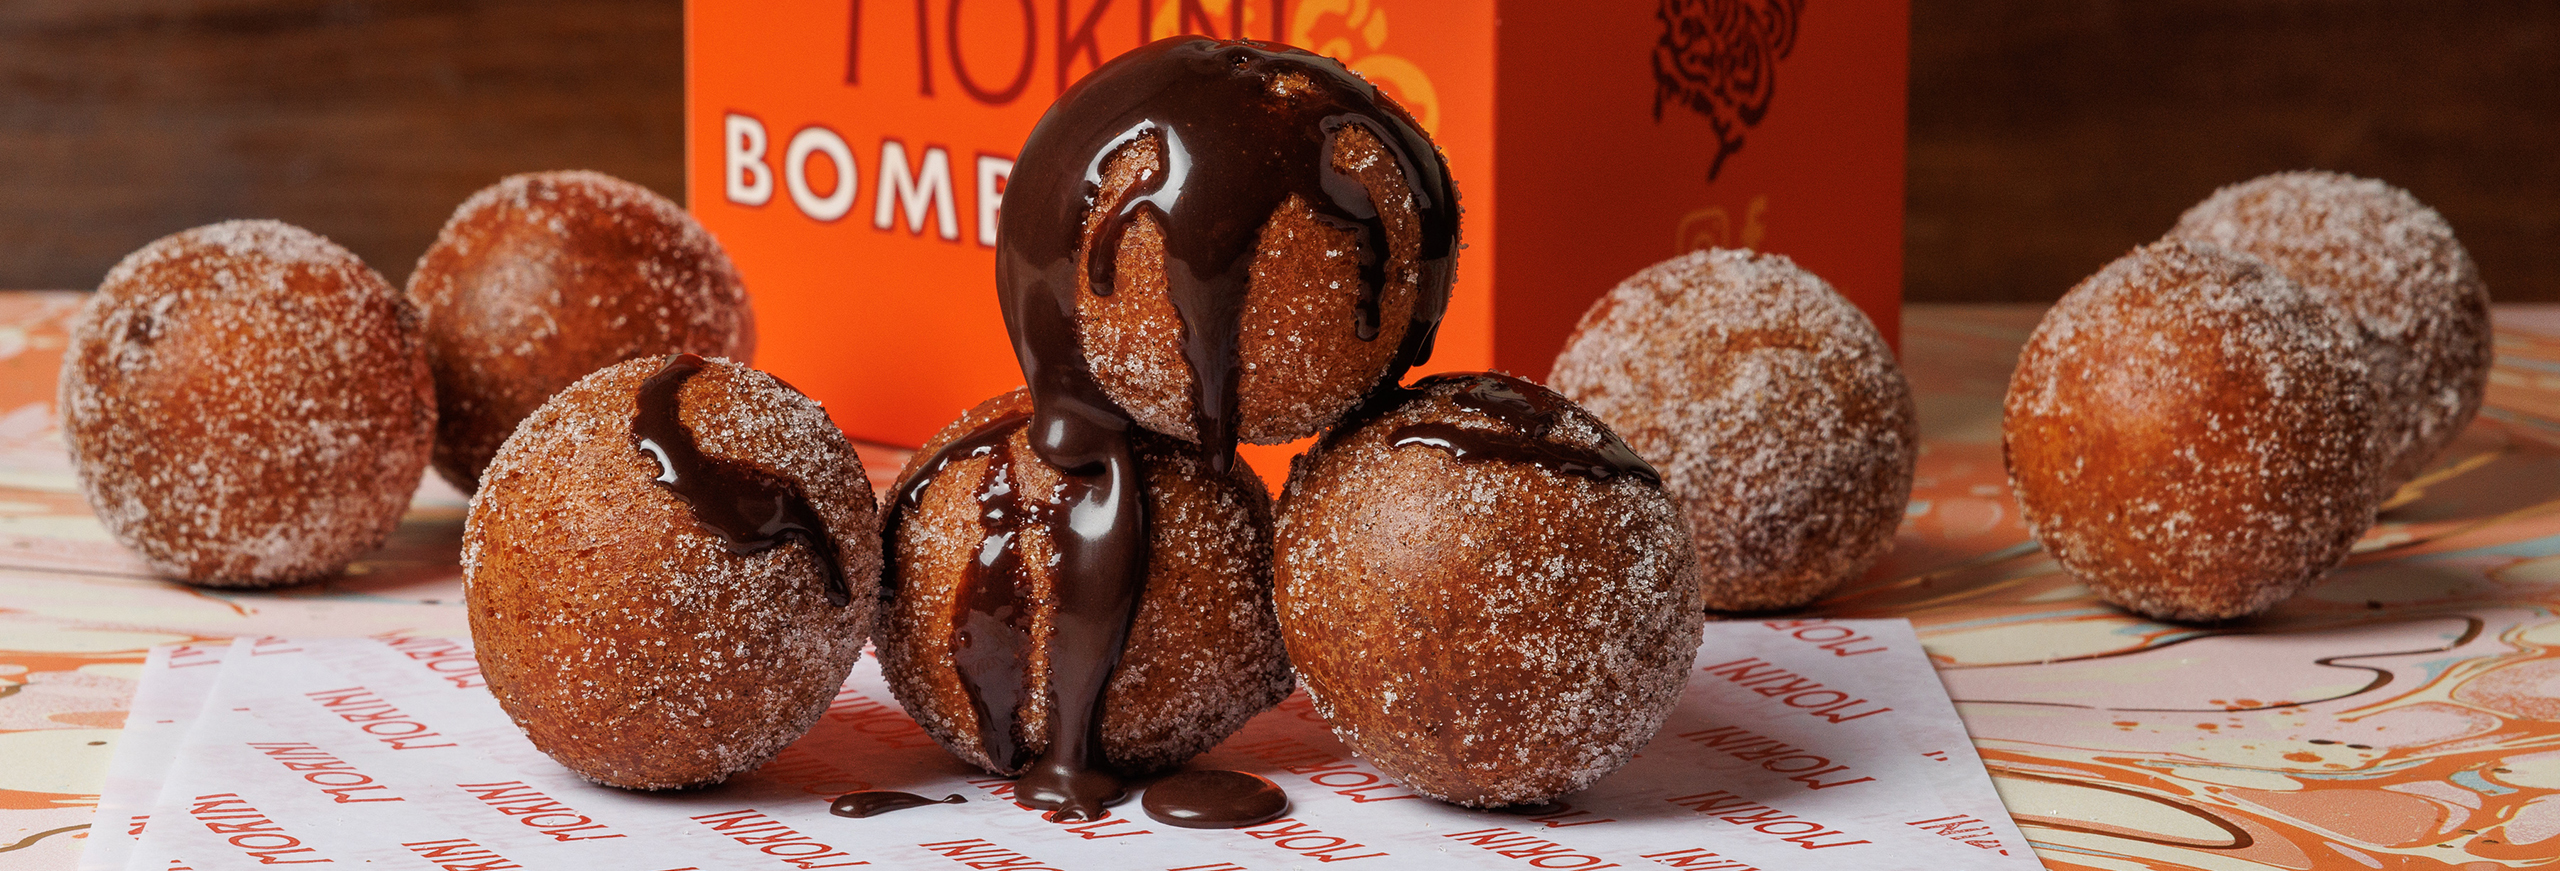 bomboloni, italian doughnuts drizzled in chocolate sauce